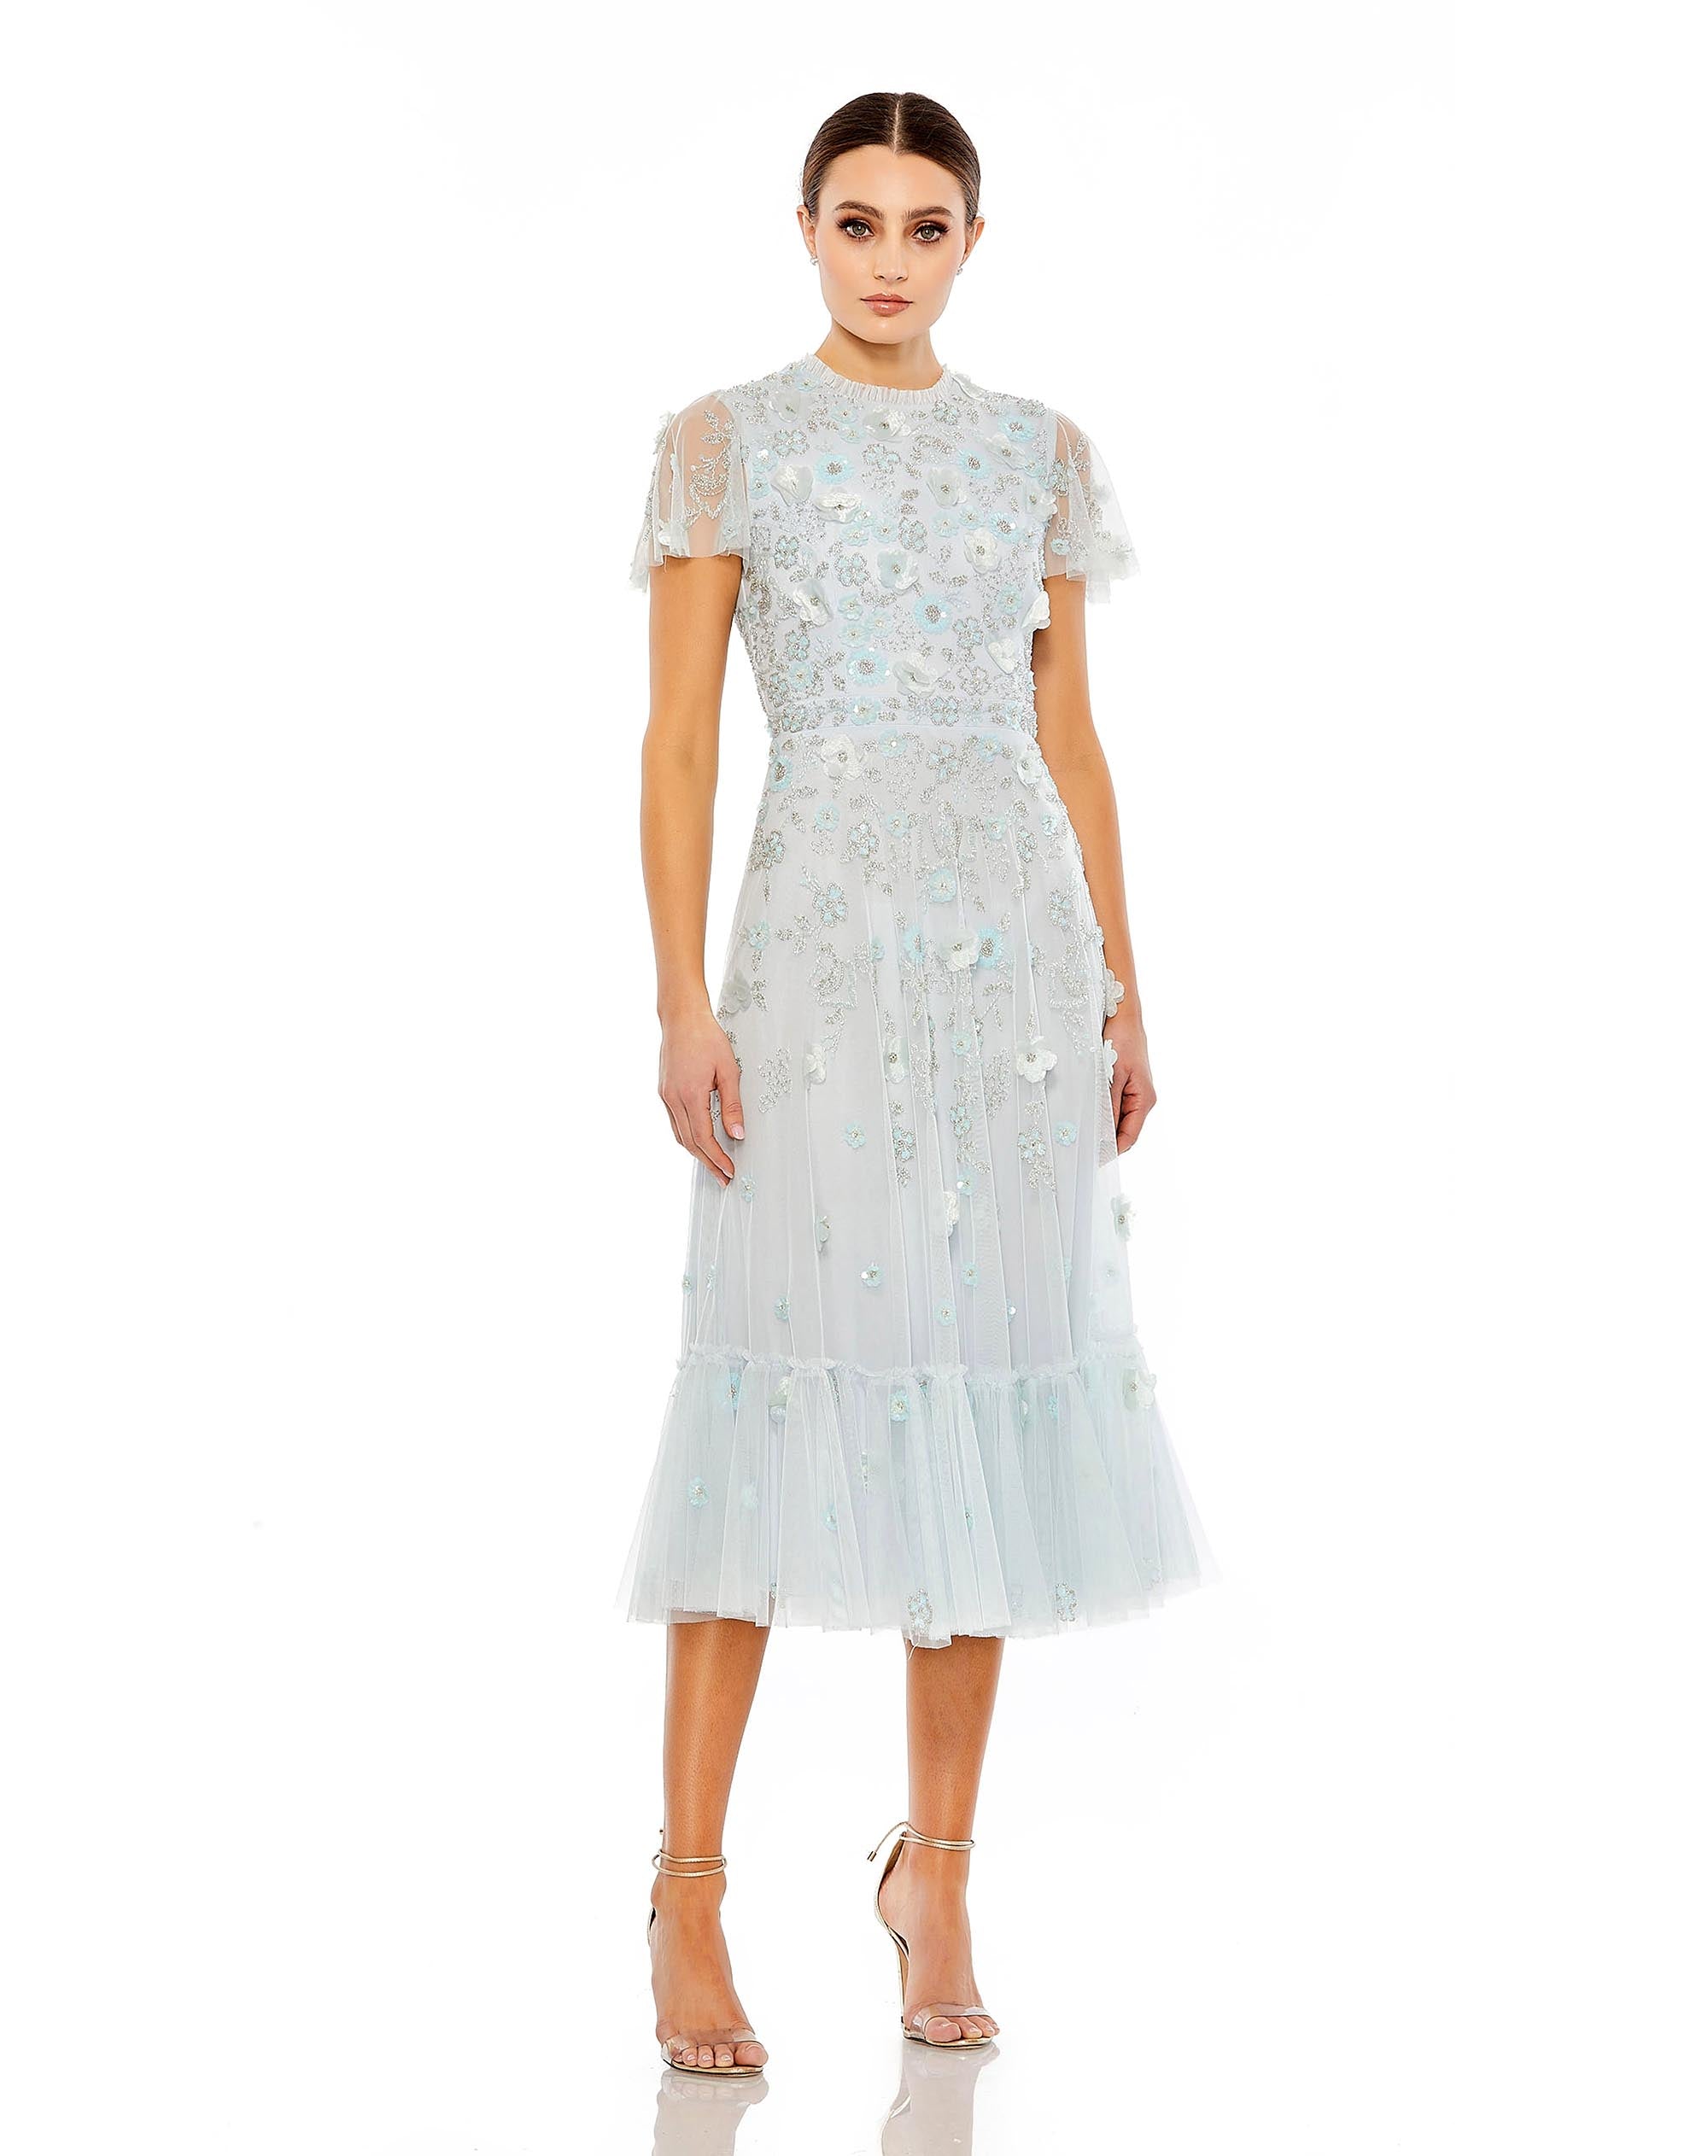 Embellished High Neck Cap Sleeve A Line Dress – Mac Duggal